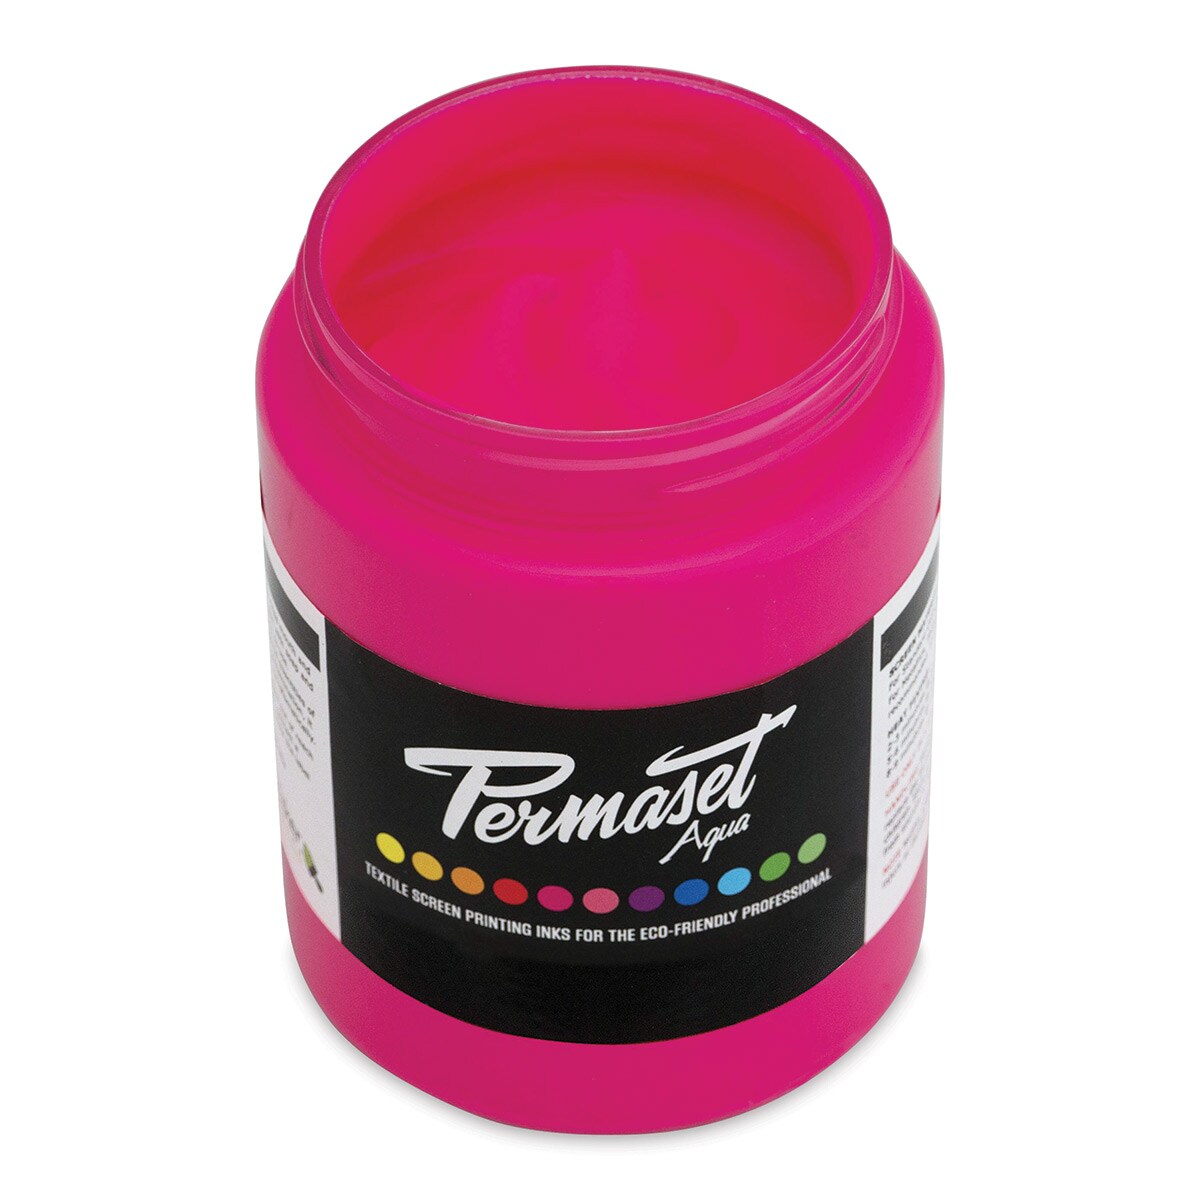 Permaset Aqua Fabric Ink - Glow Pink, 300 ml